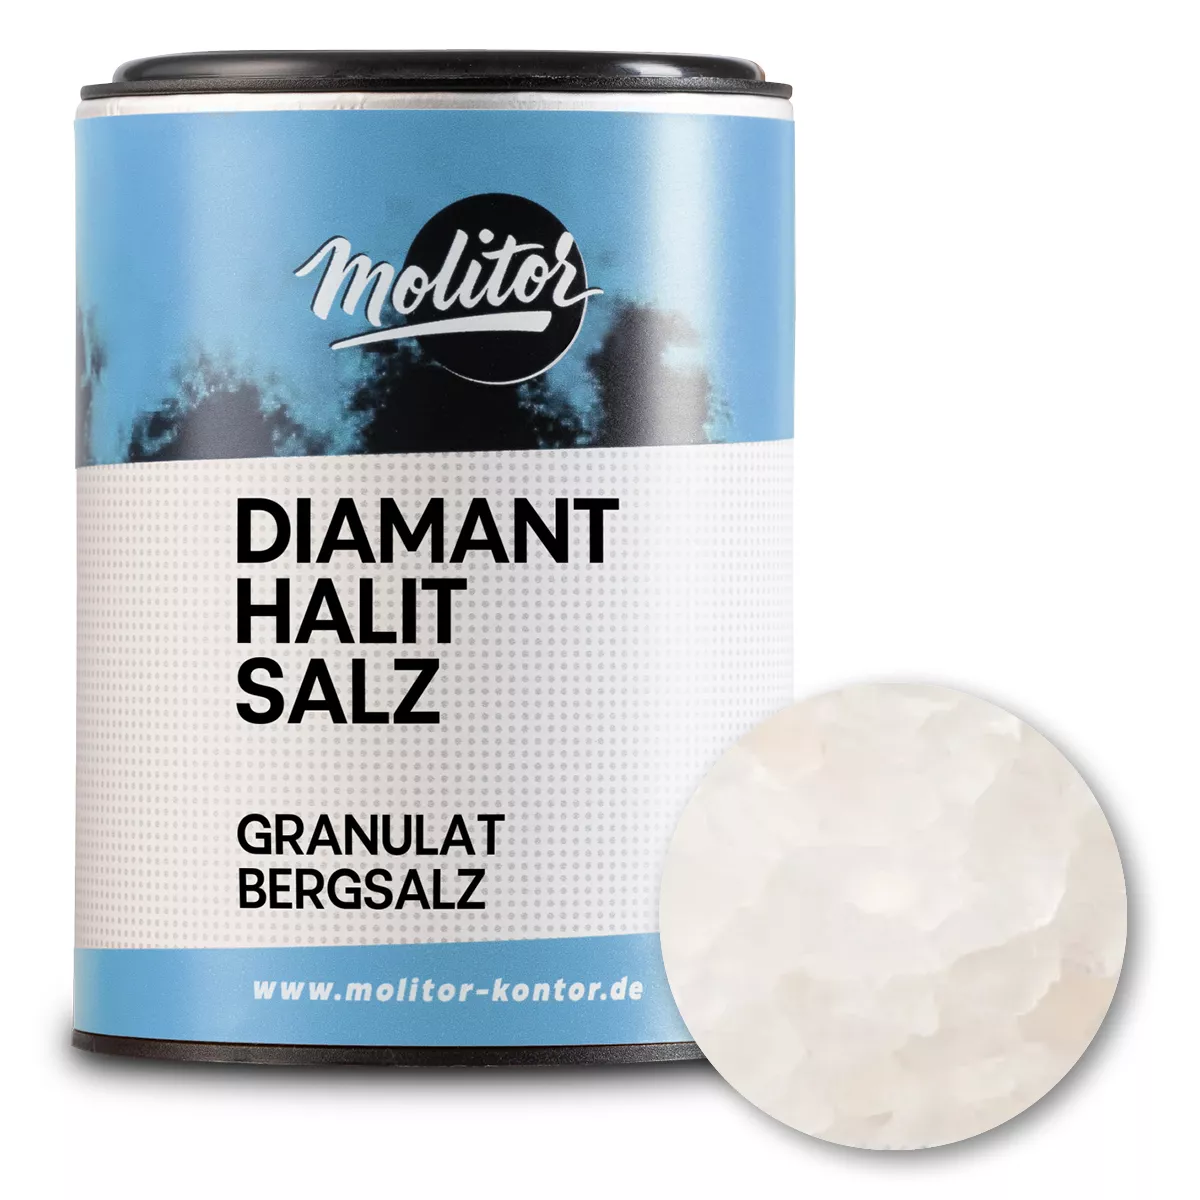 Halit Salz Granulat | der Diamant unter den Salzen